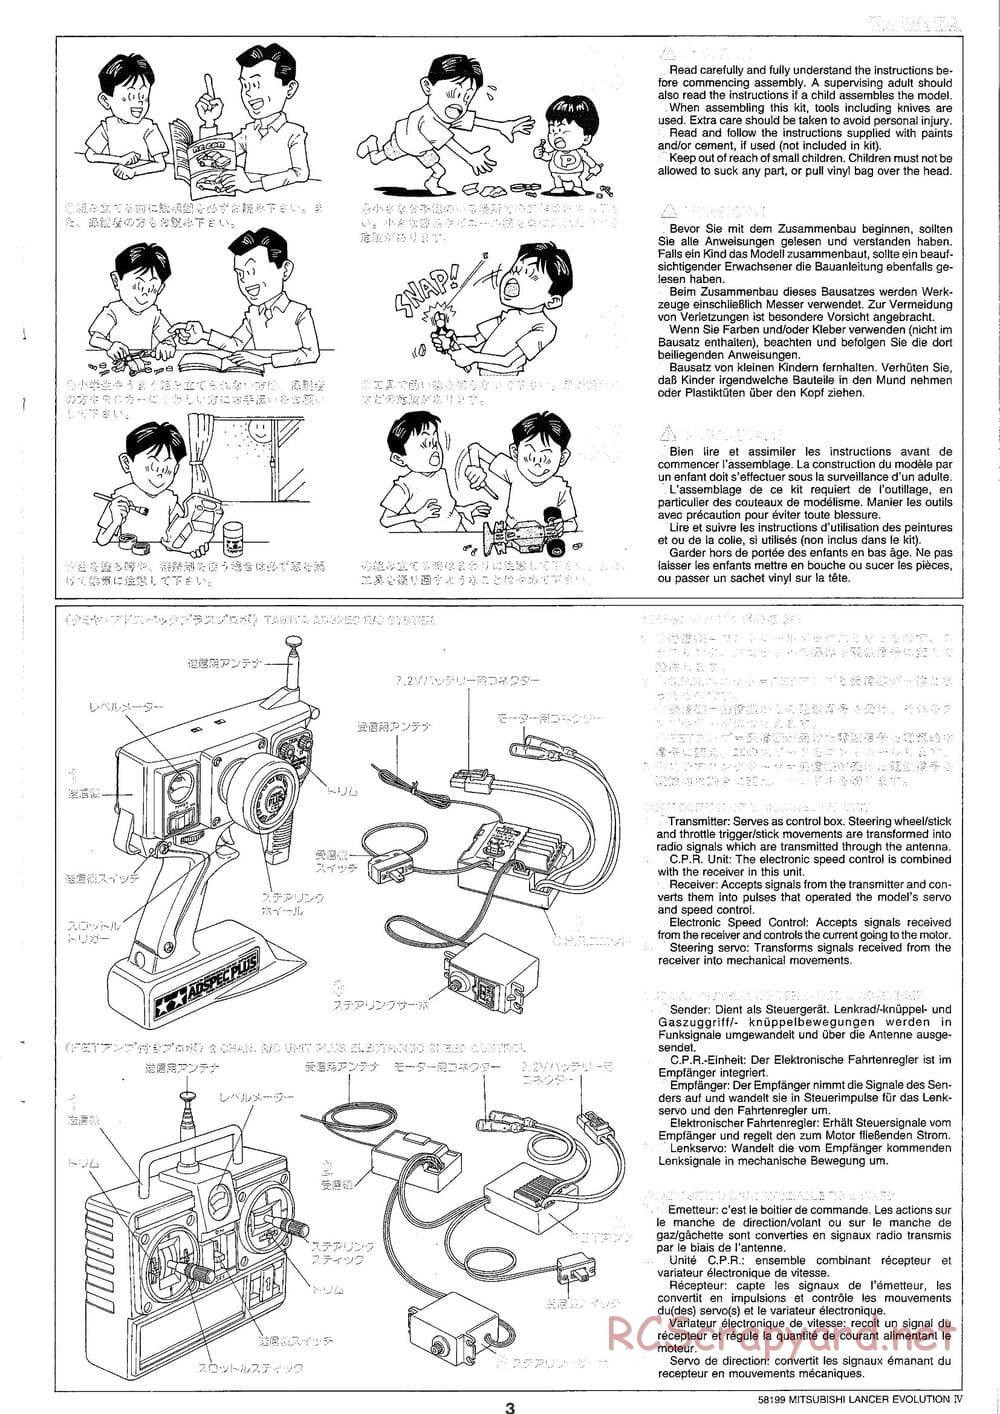 Tamiya - Mitsubishi Lancer Evolution IV - TA-03F Chassis - Manual - Page 3